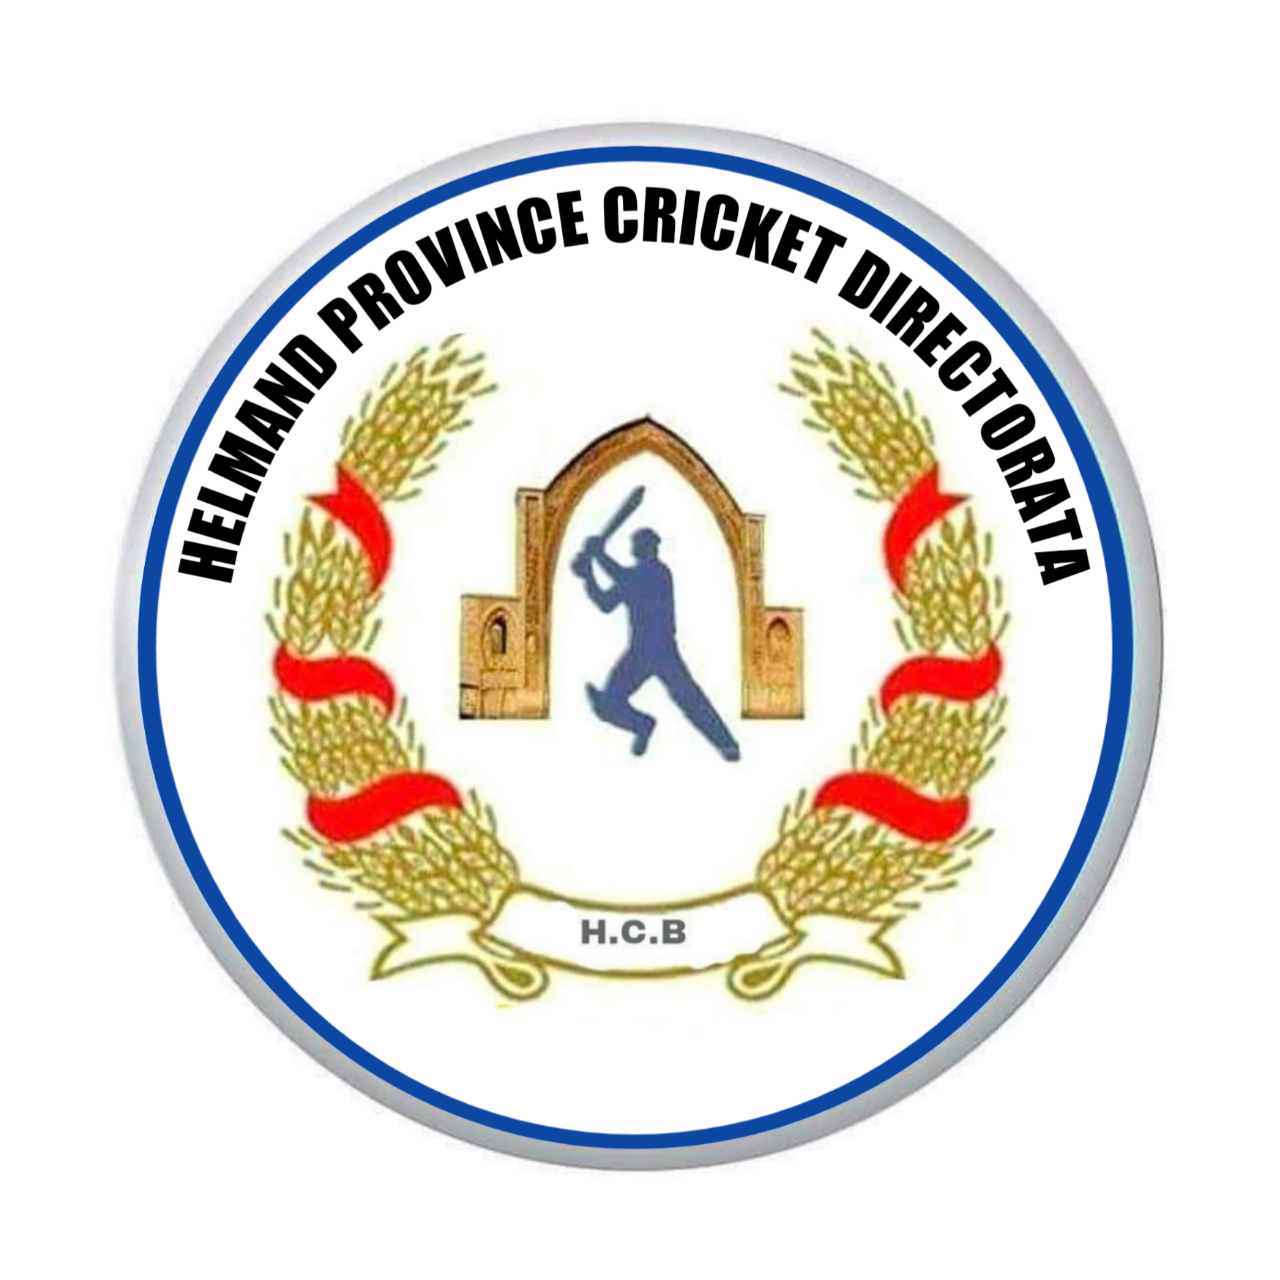 Helmand t20 cricket tournament